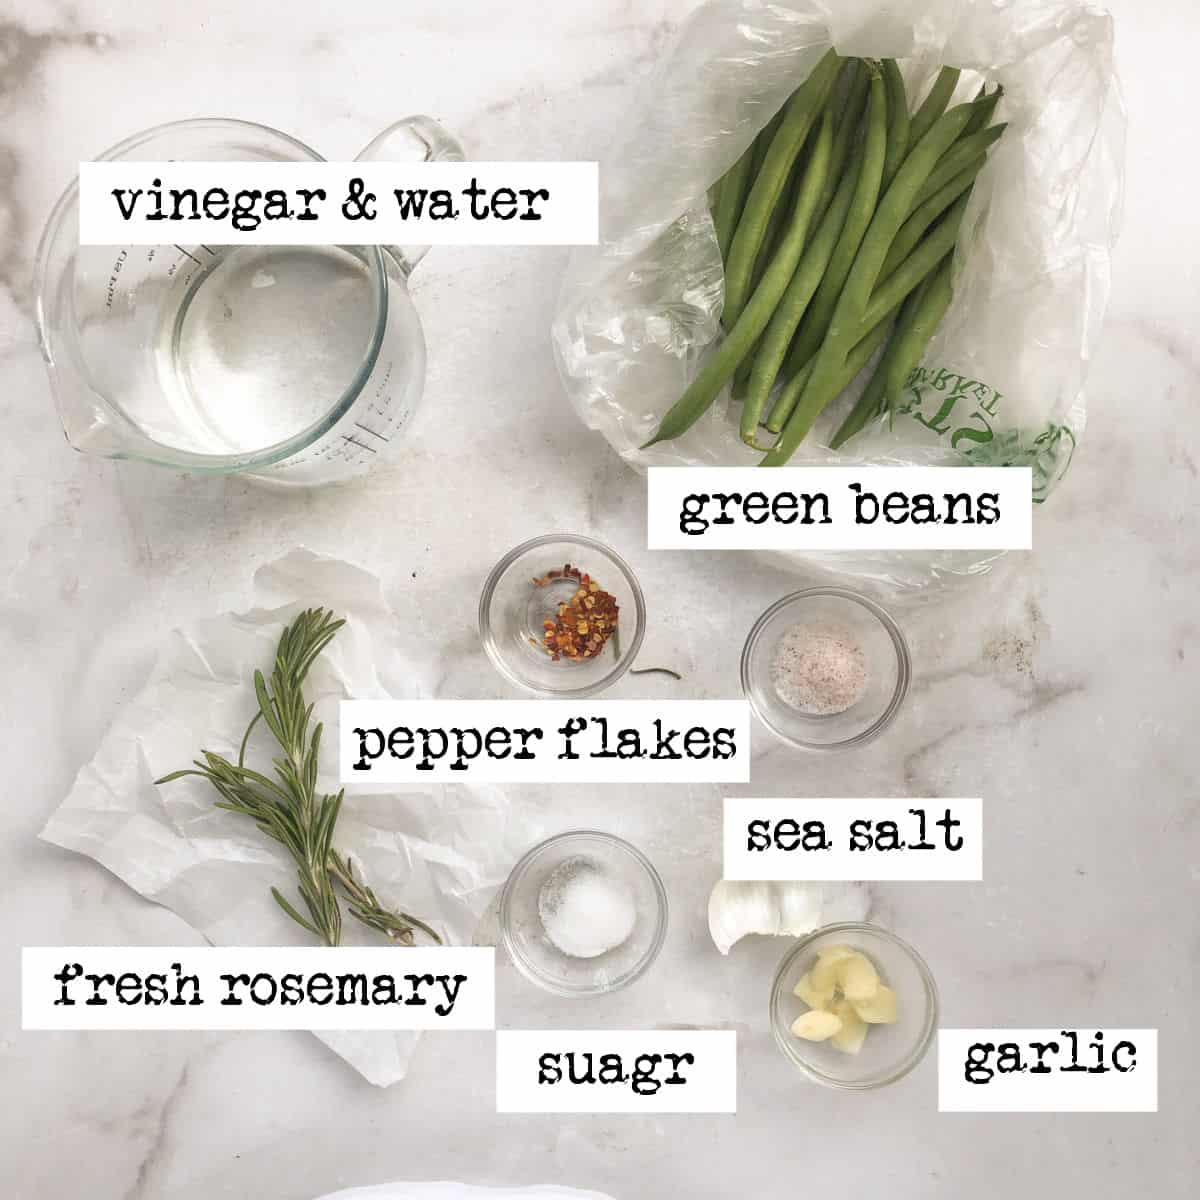 Cup of vinegar & water, fresh green beans, pepper flakes, rosemary sprigs,, sea salt,sugar, and sliced garlic.